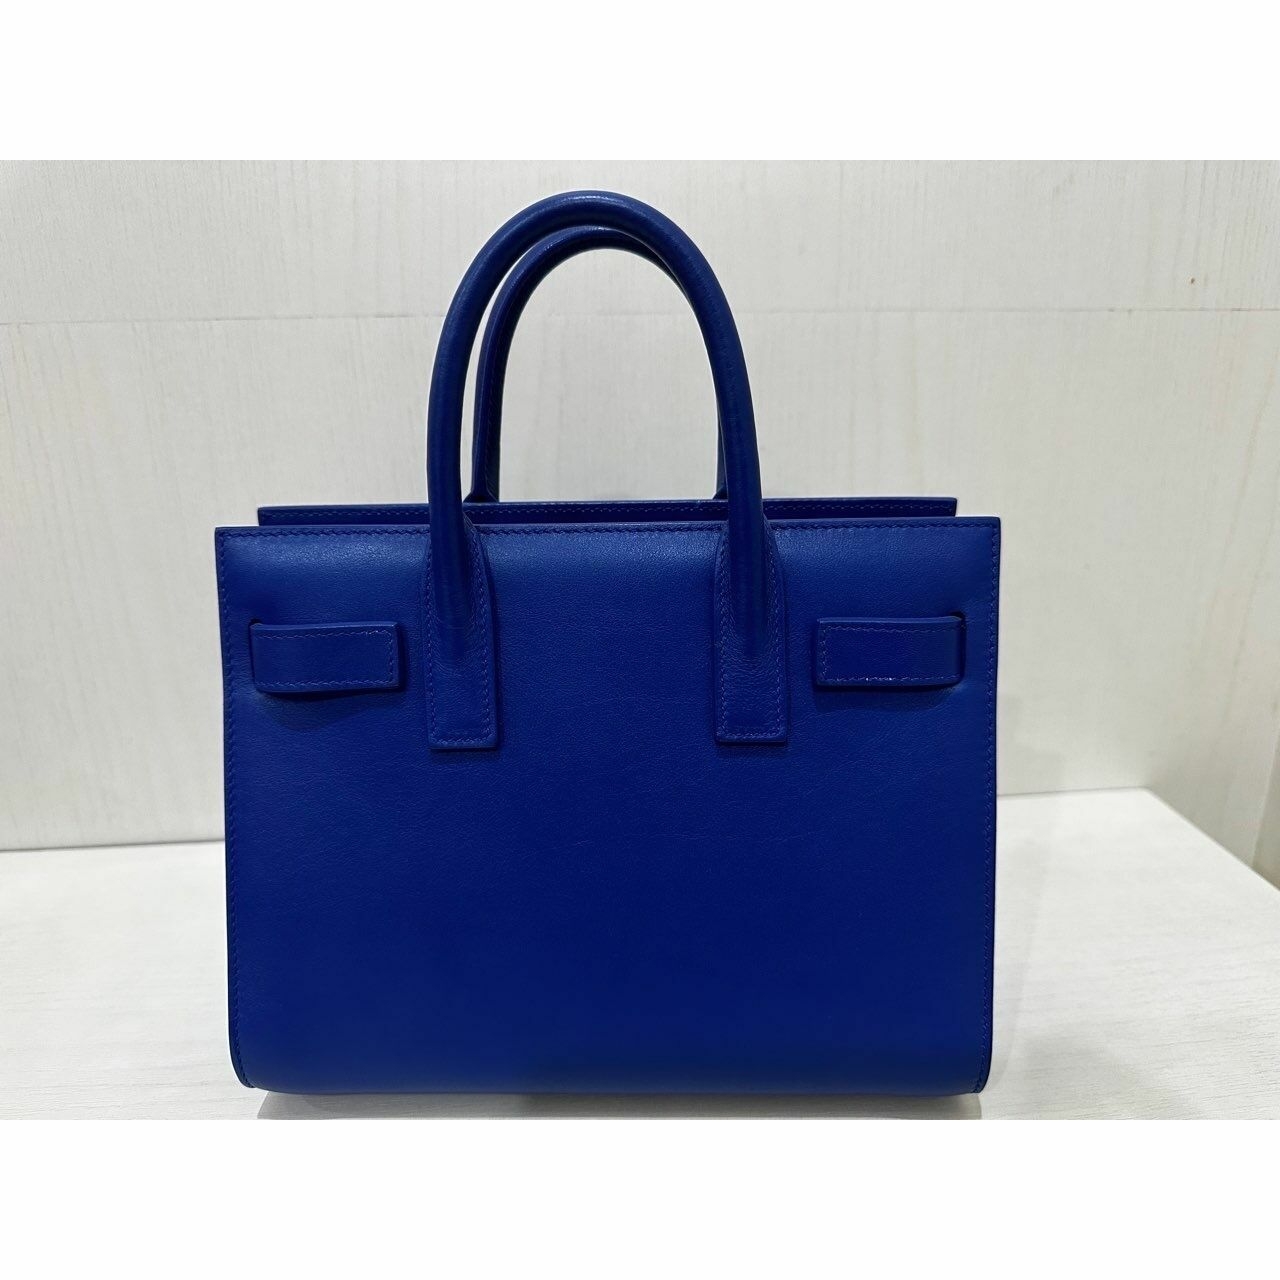 Yves Saint Laurent Blue Bag